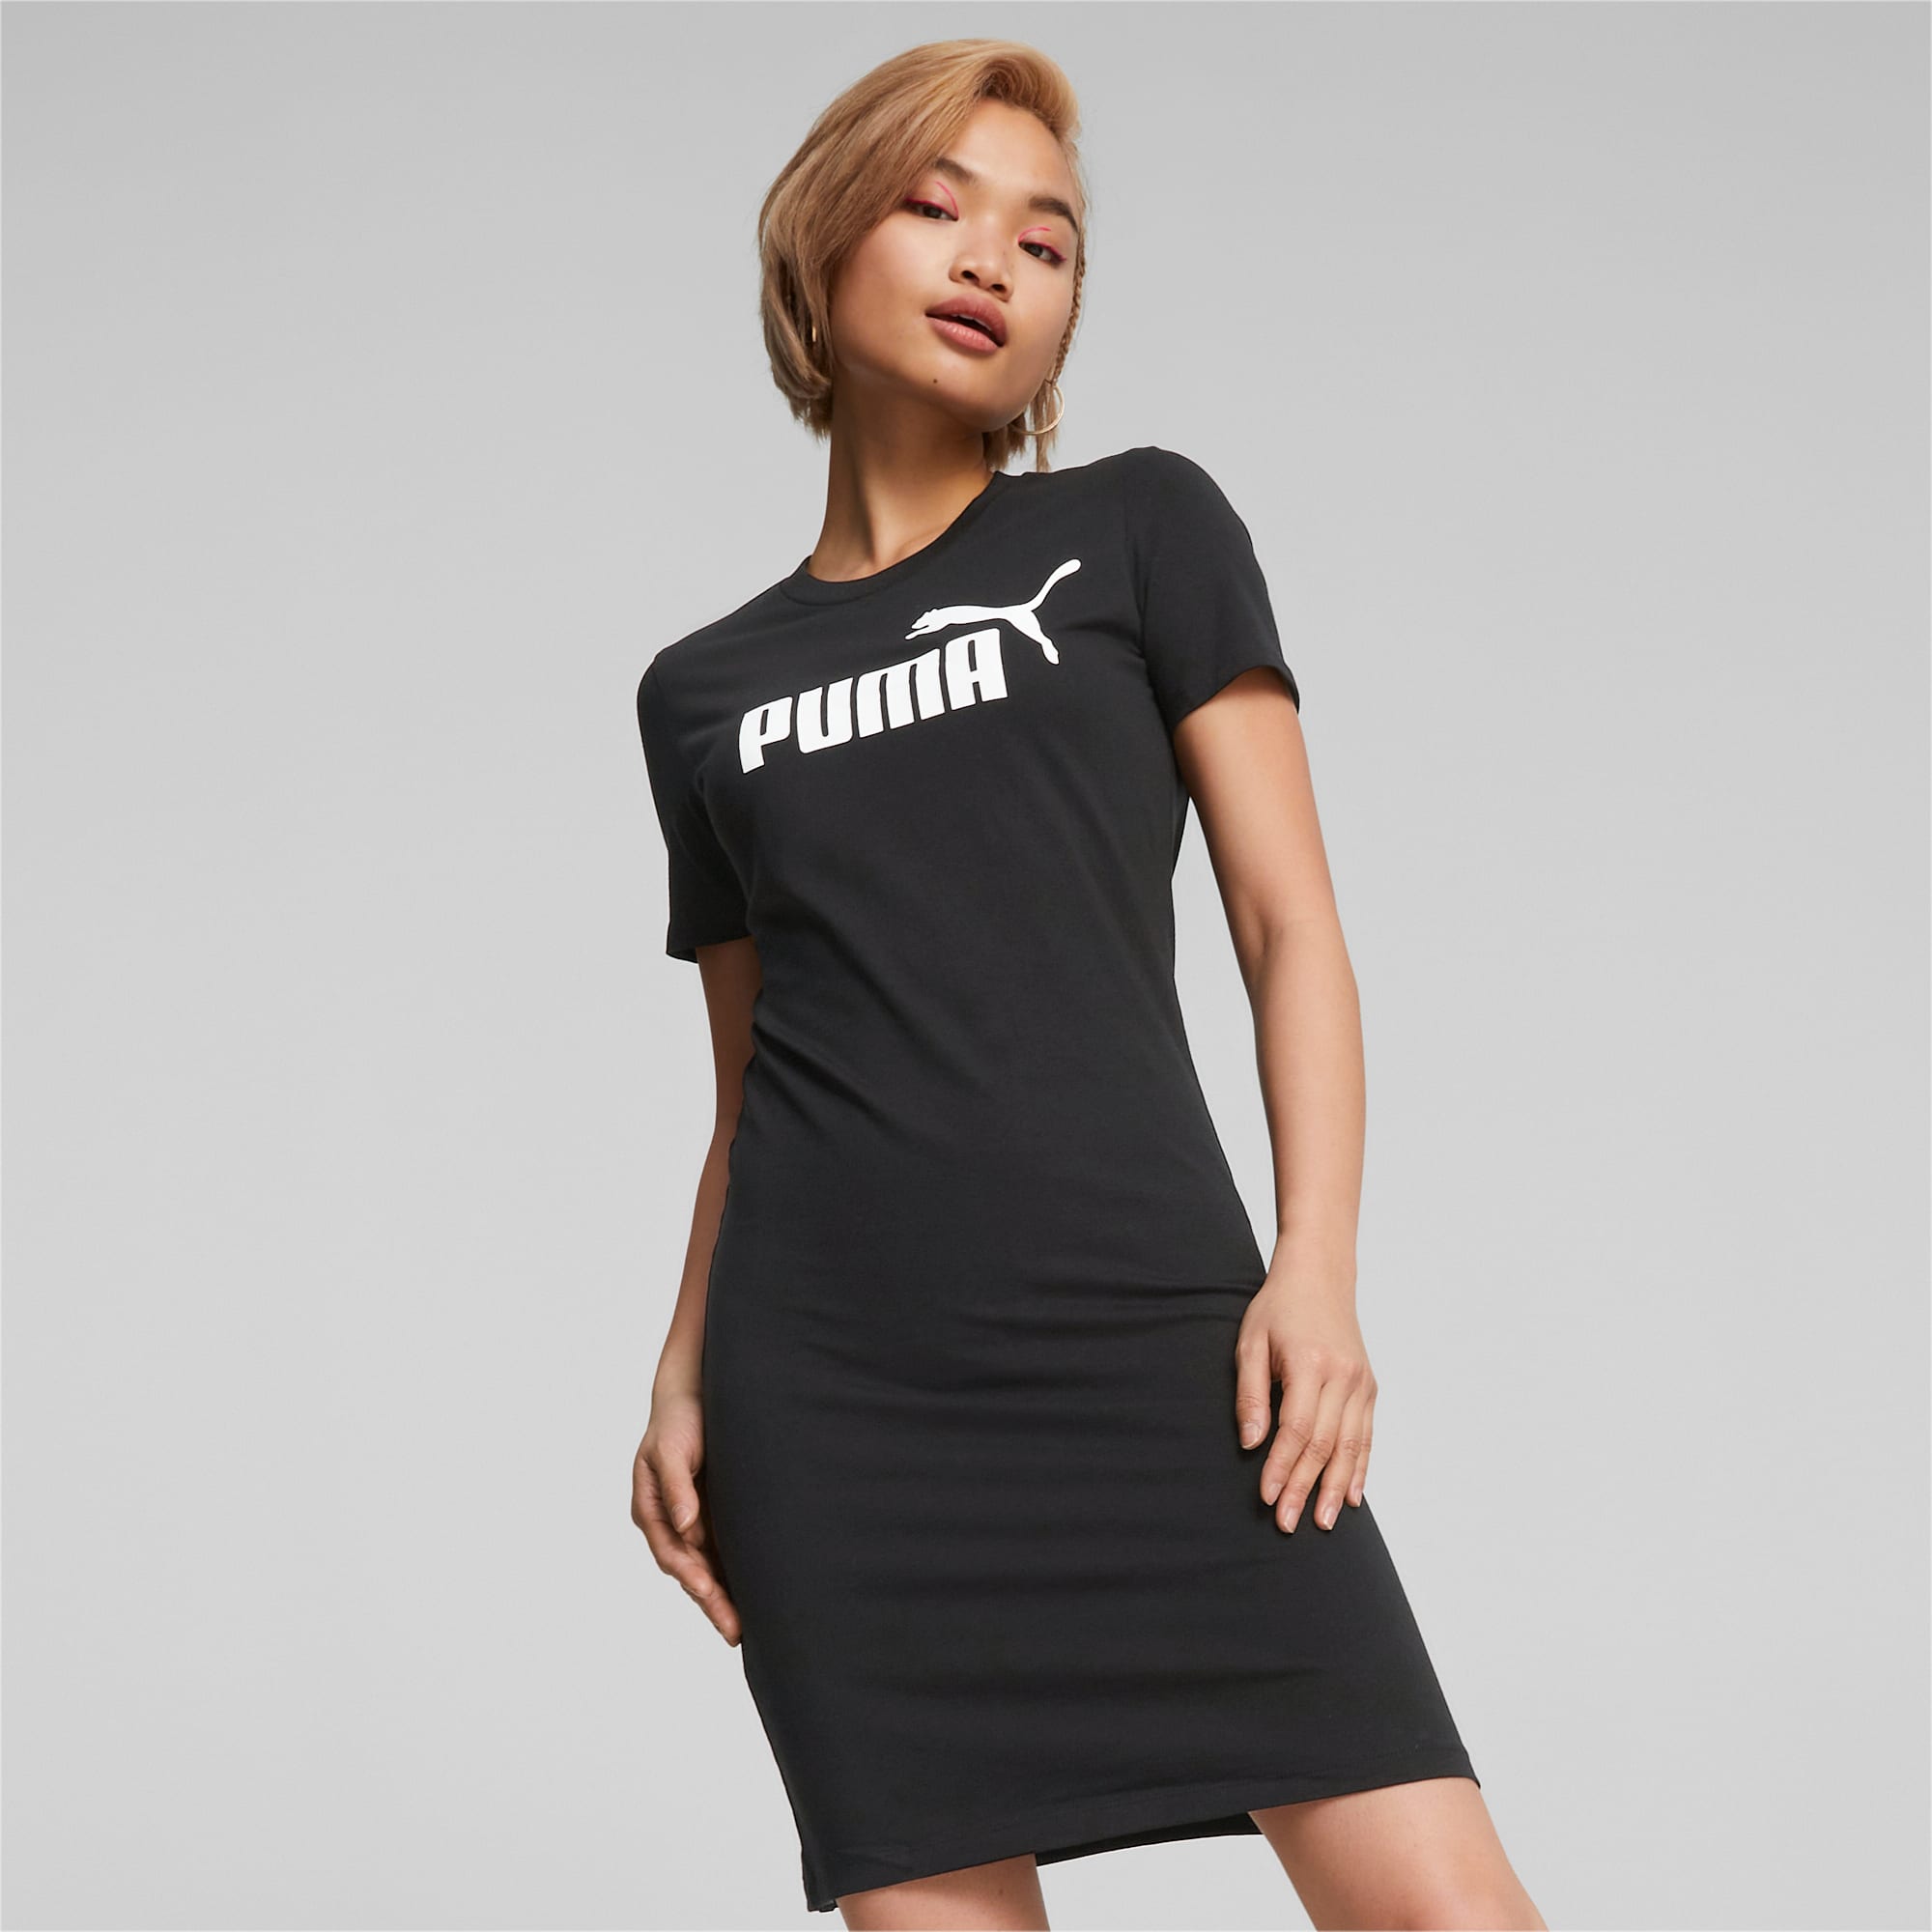 Puma Women's Clothing